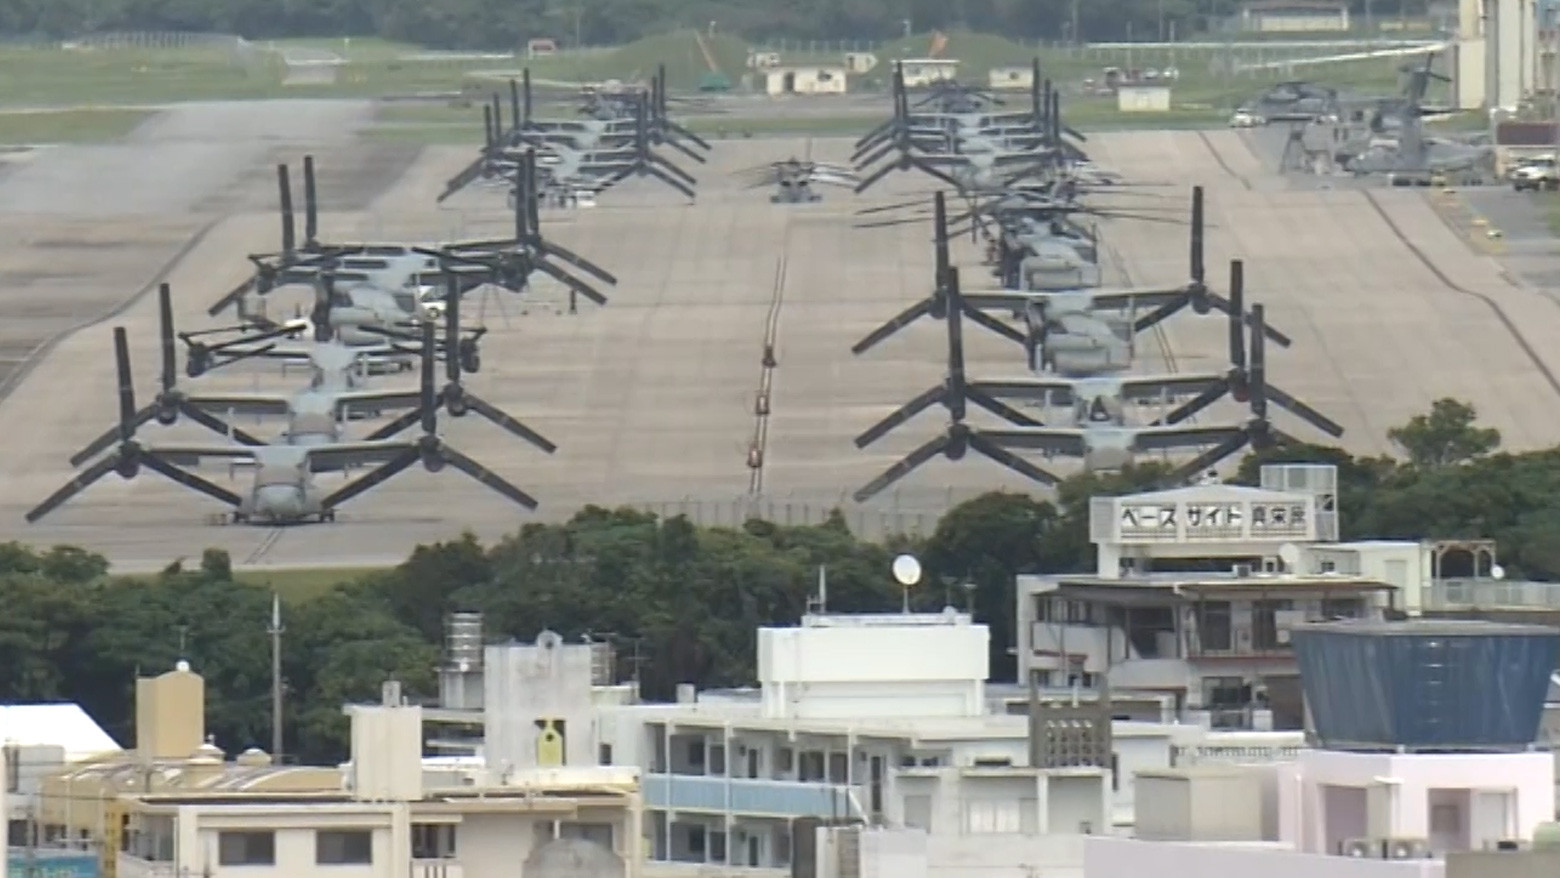 50 Tahun Setelah Pengembalian, Okinawa Tanggung Beban Berat Keberadaan Pangkalan AS